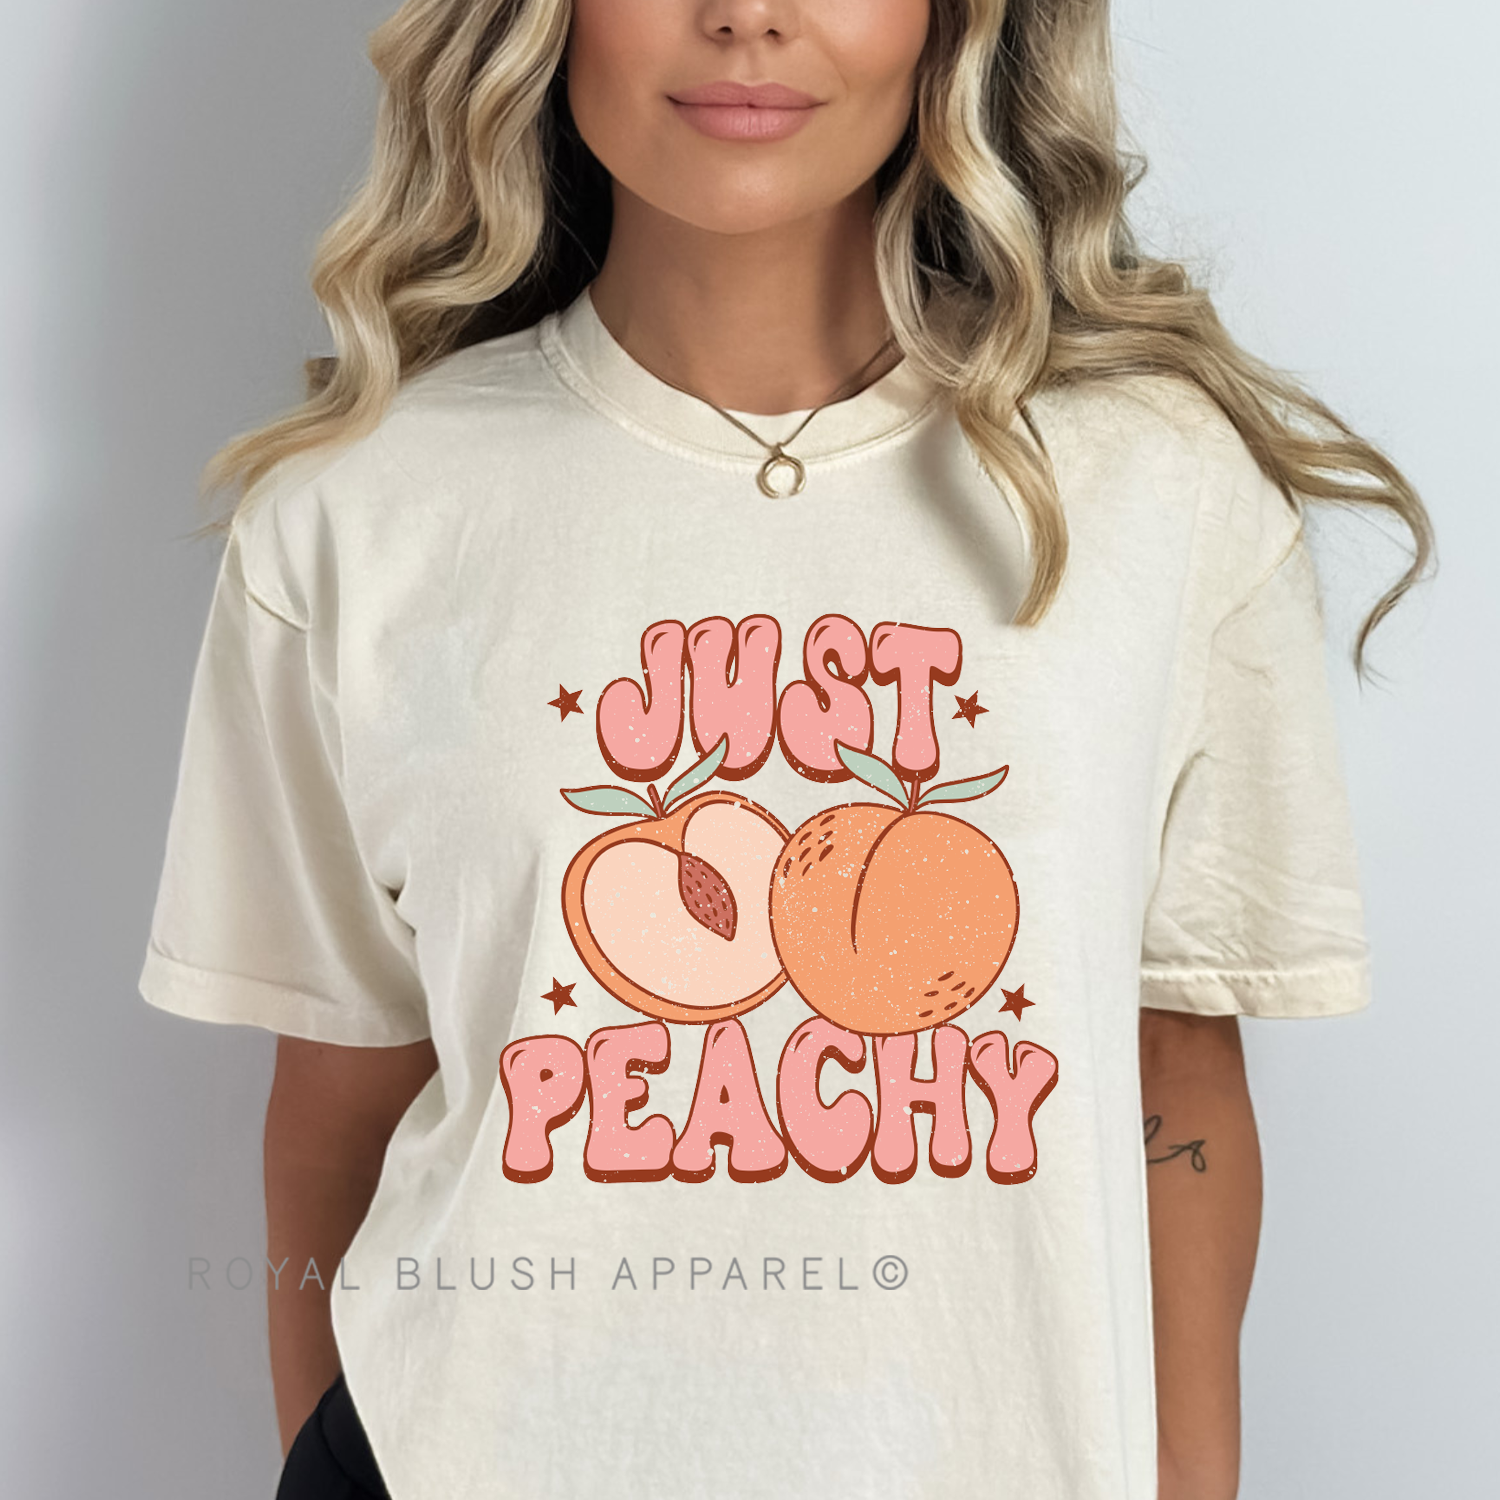 Just Peachy Full Color Transfer